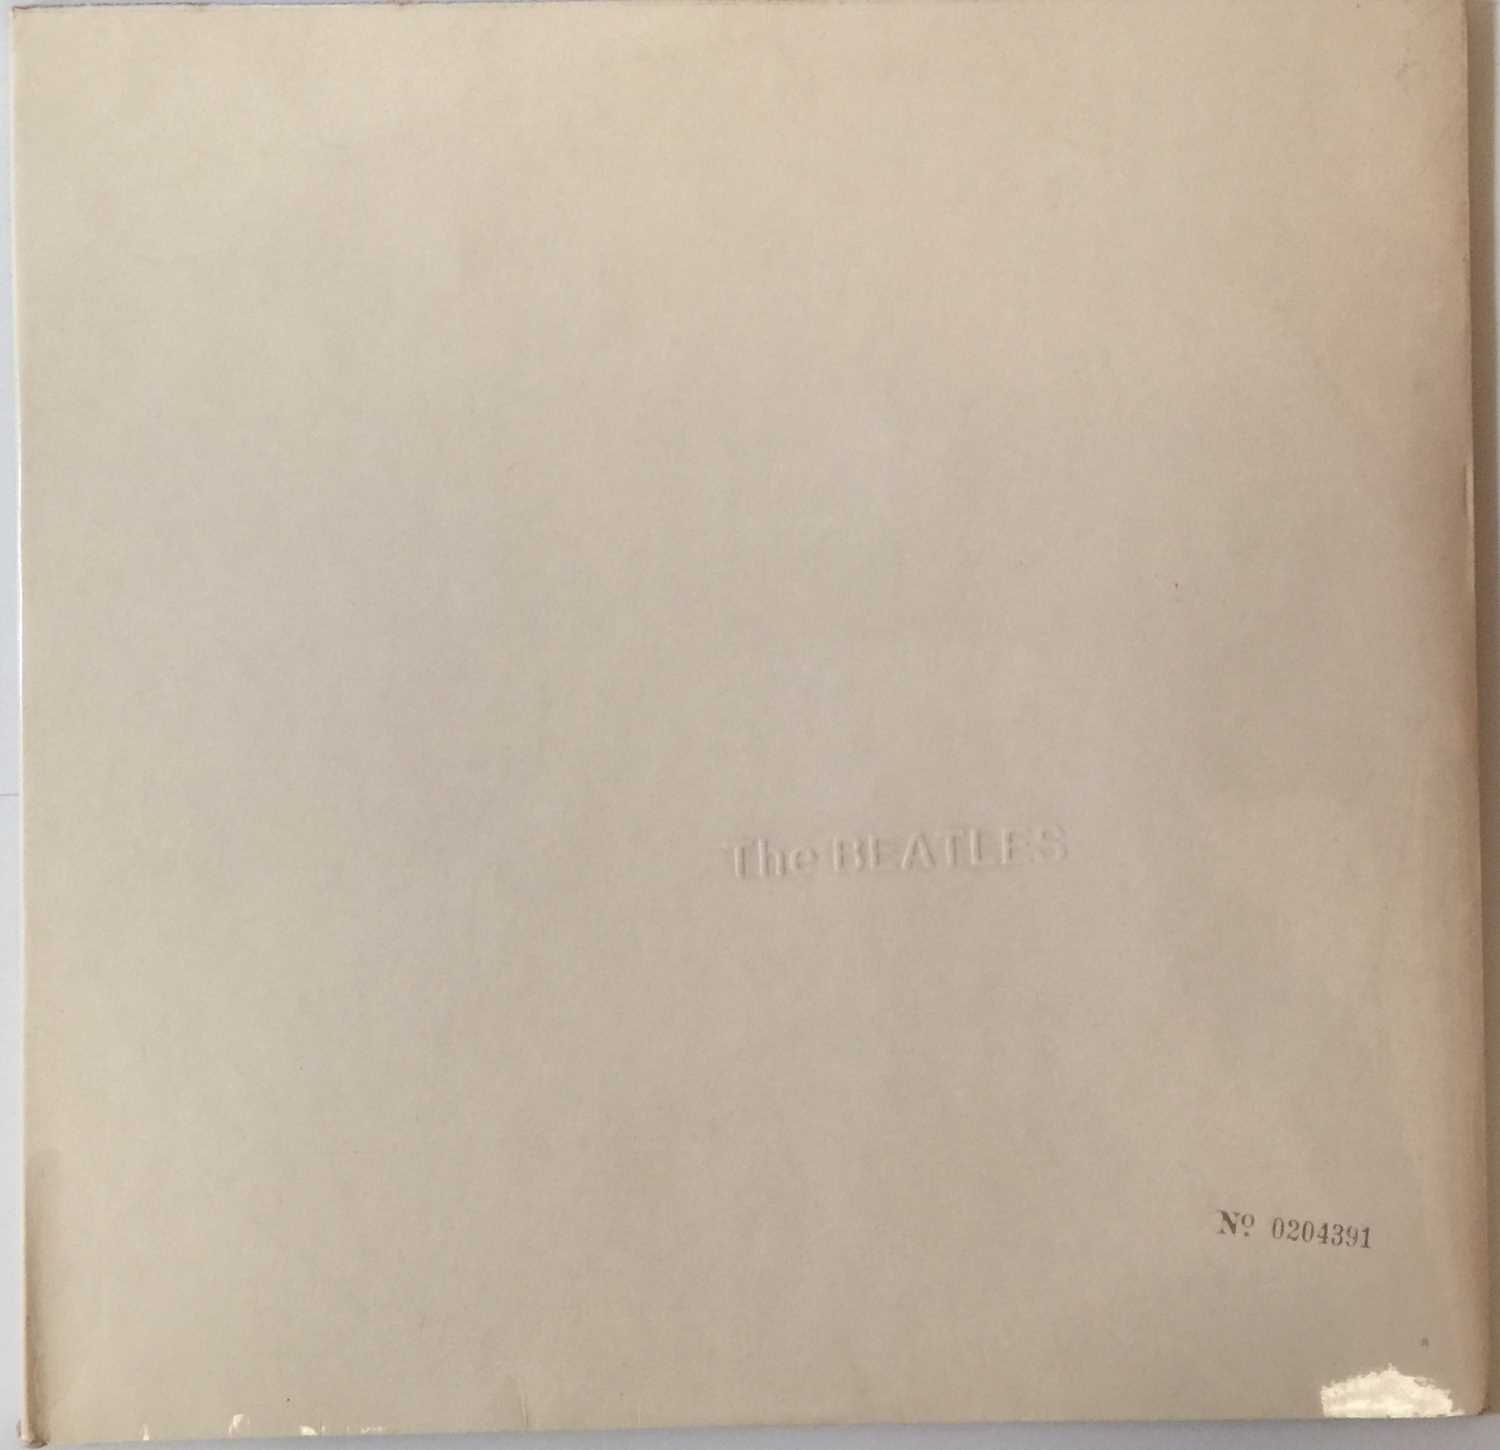 Lot 242 - THE BEATLES - WHITE ALBUM LP (UK MONO NO: 0204391)